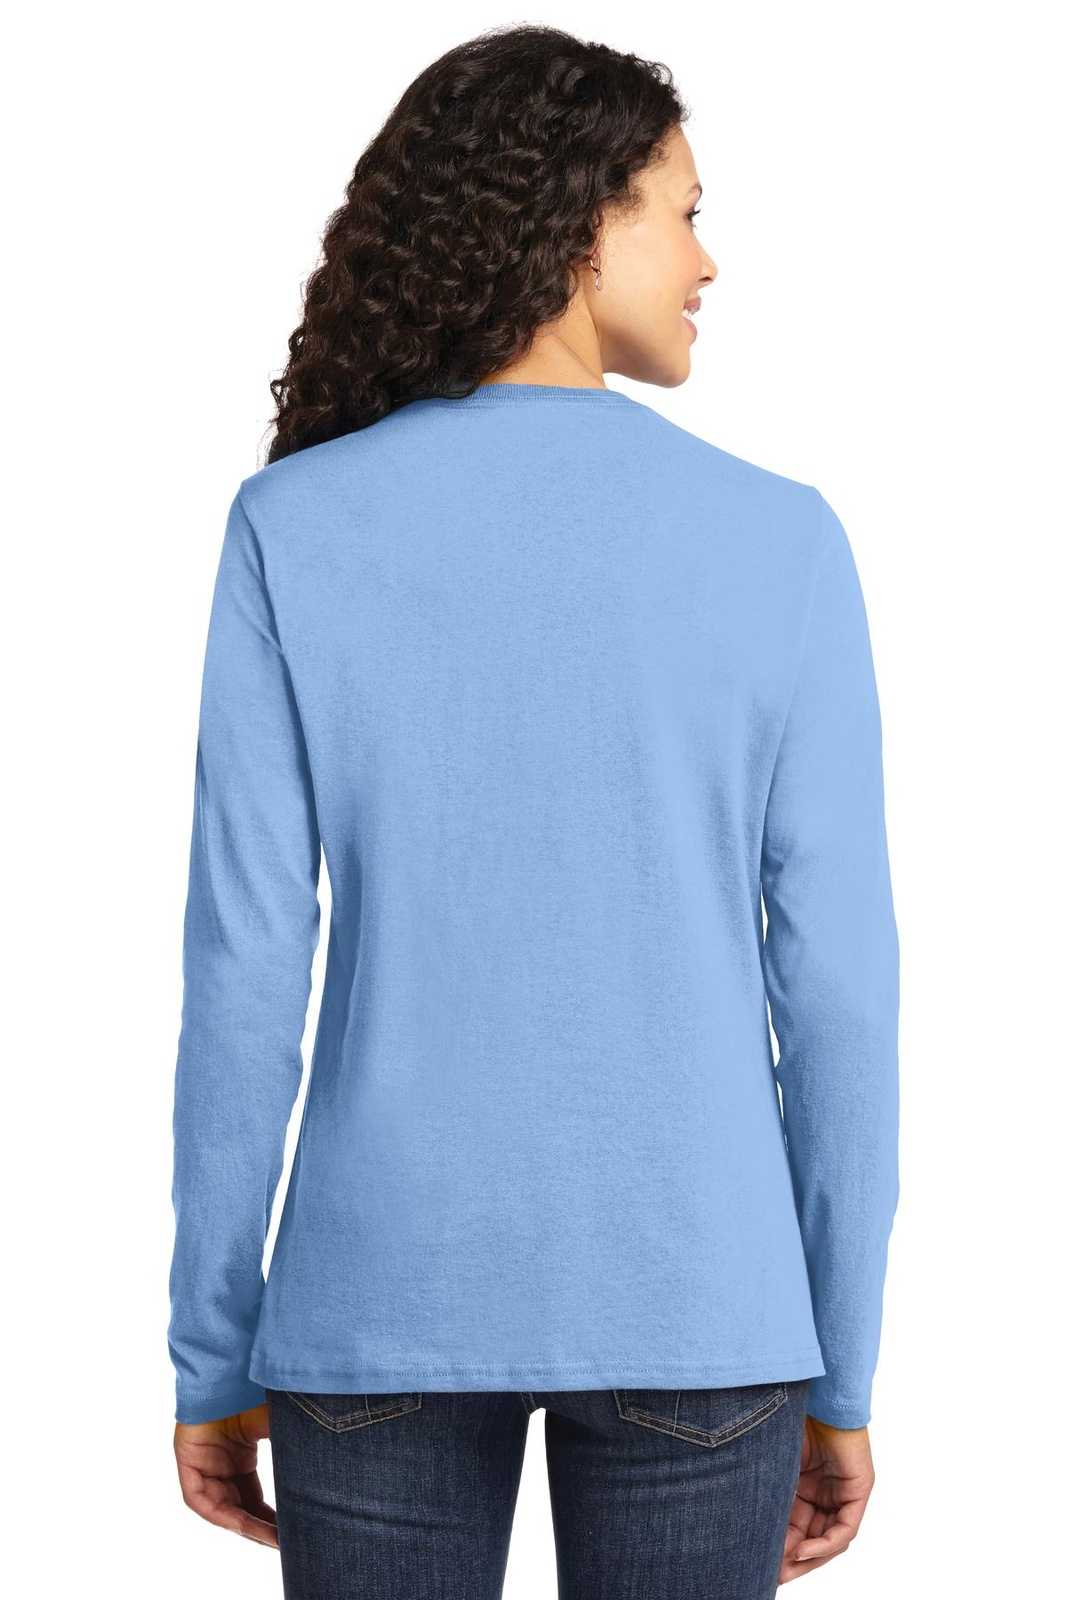 Port &amp; Company LPC54LS Ladies Long Sleeve Core Cotton Tee - Light Blue - HIT a Double - 2